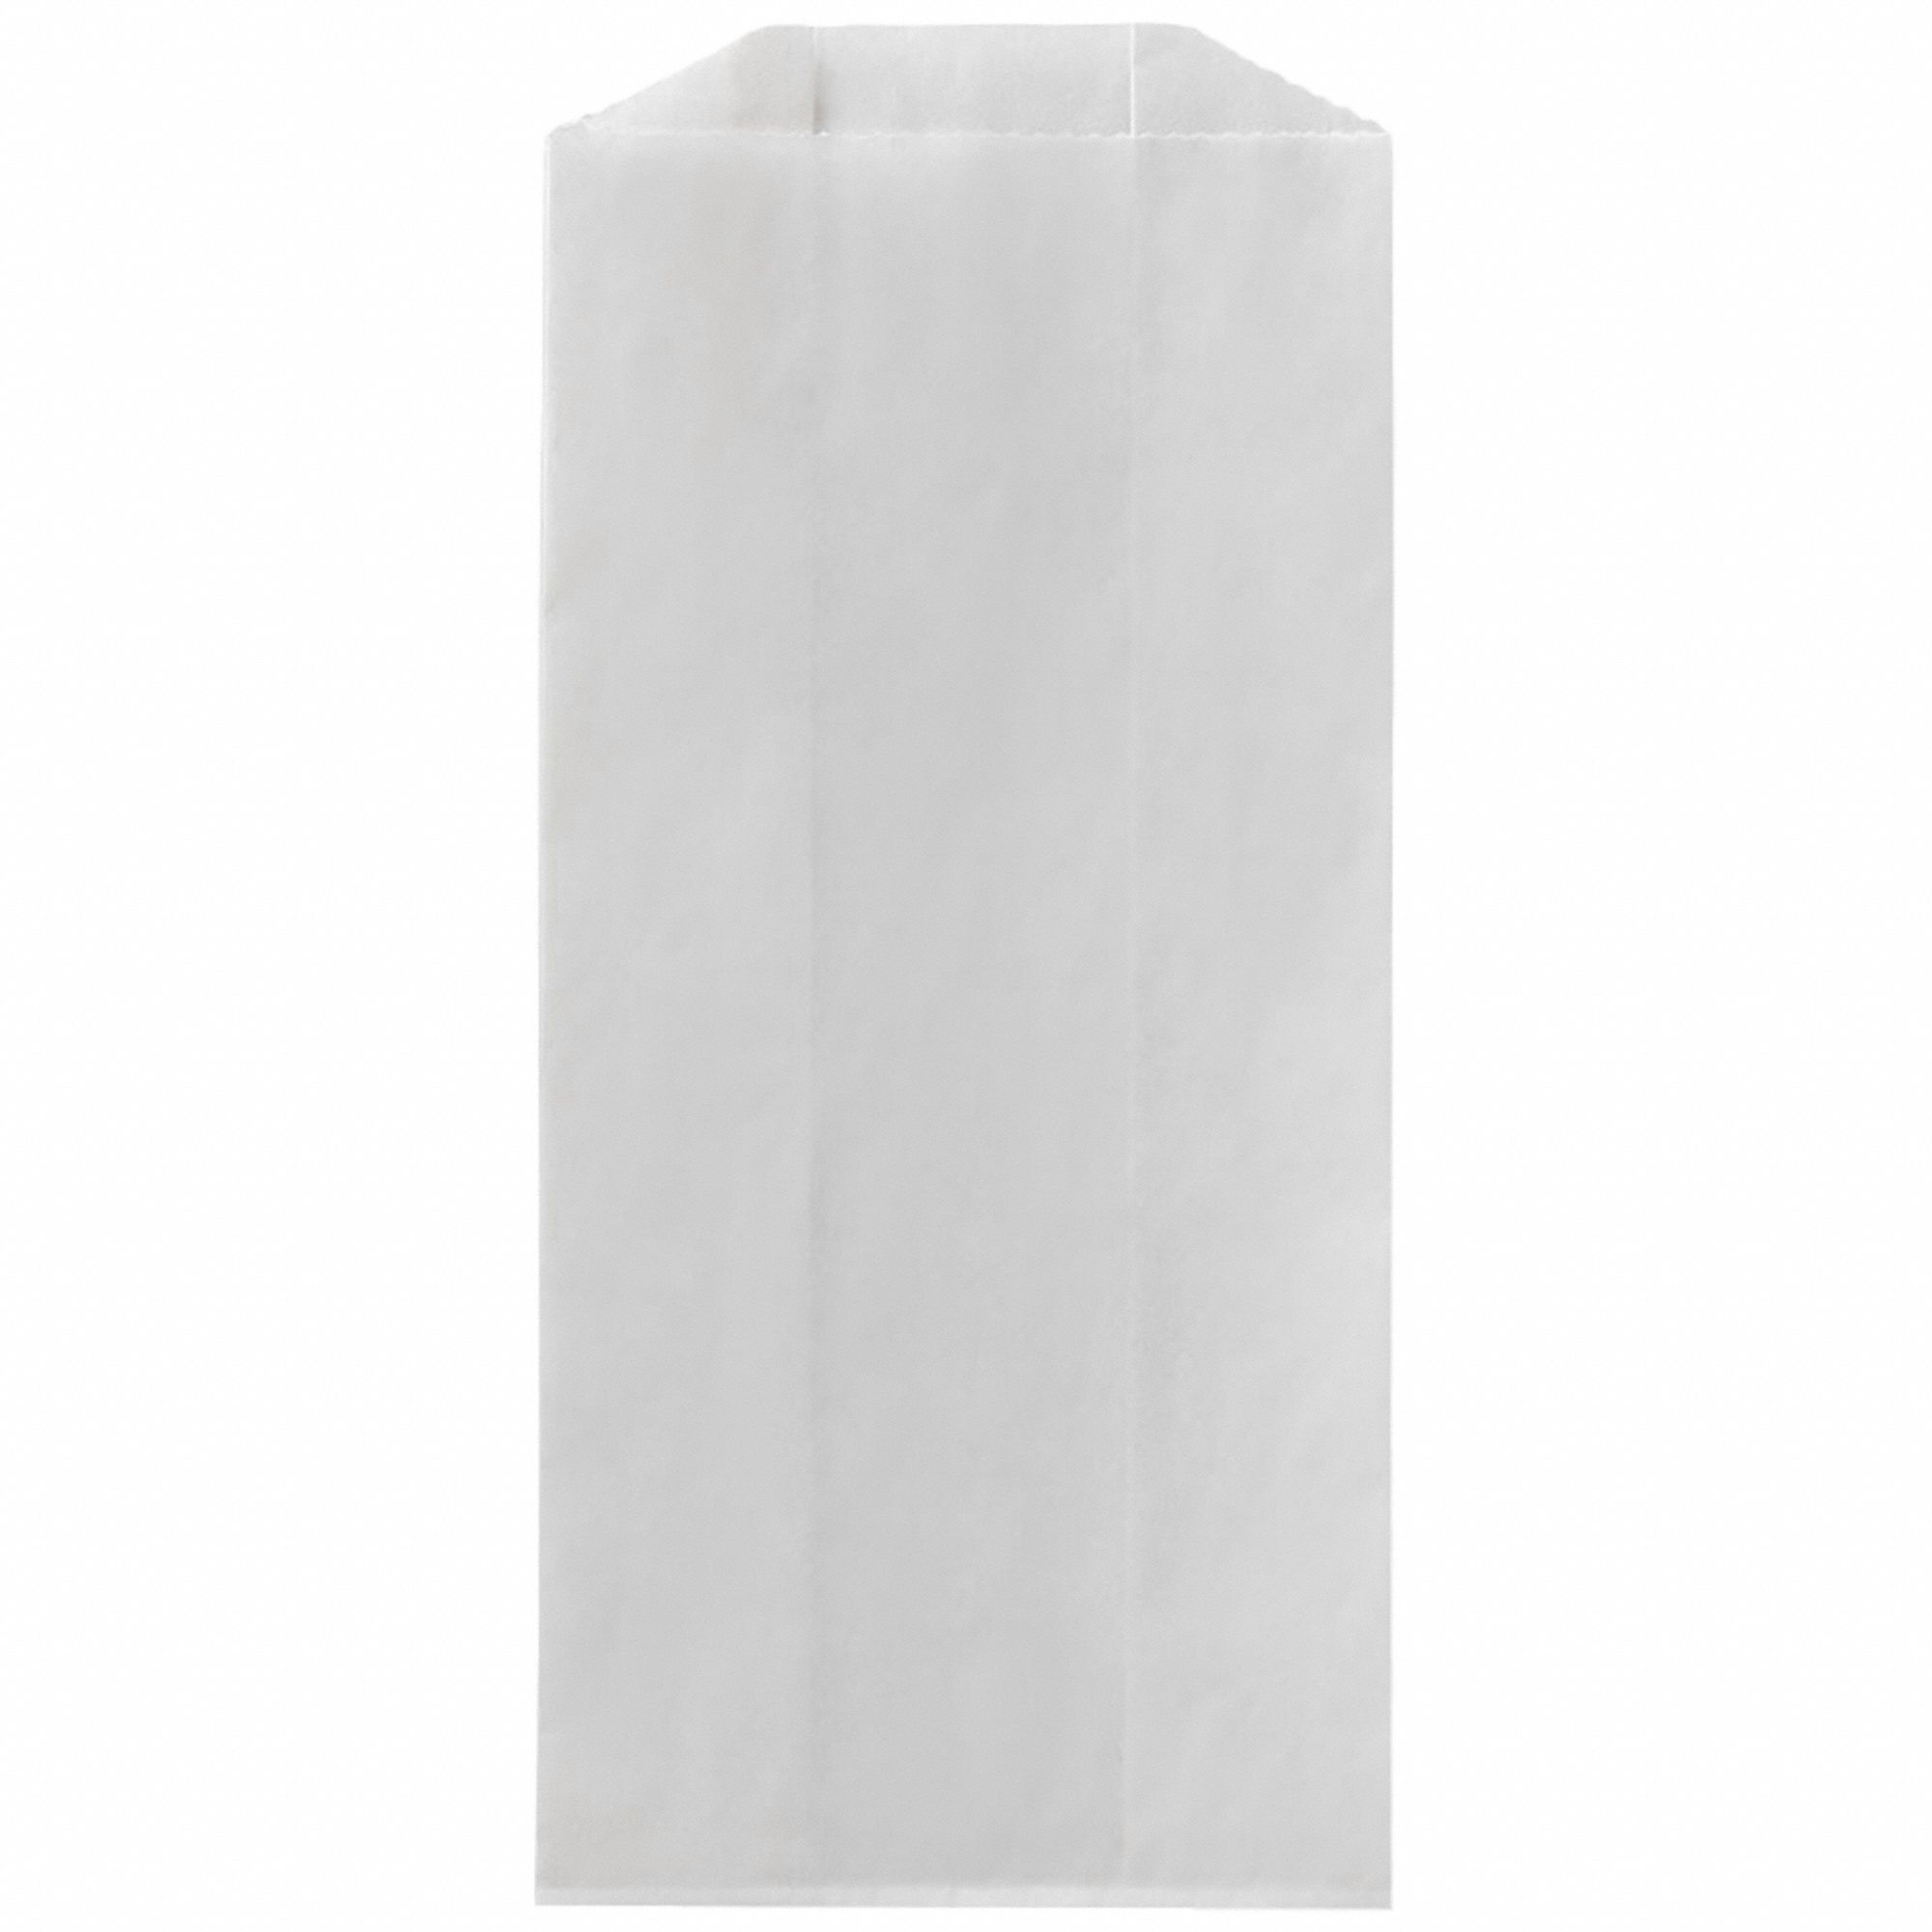 Popcorn Bag: 1.5 oz Size, Paper, 330-PL, 1,000 PK